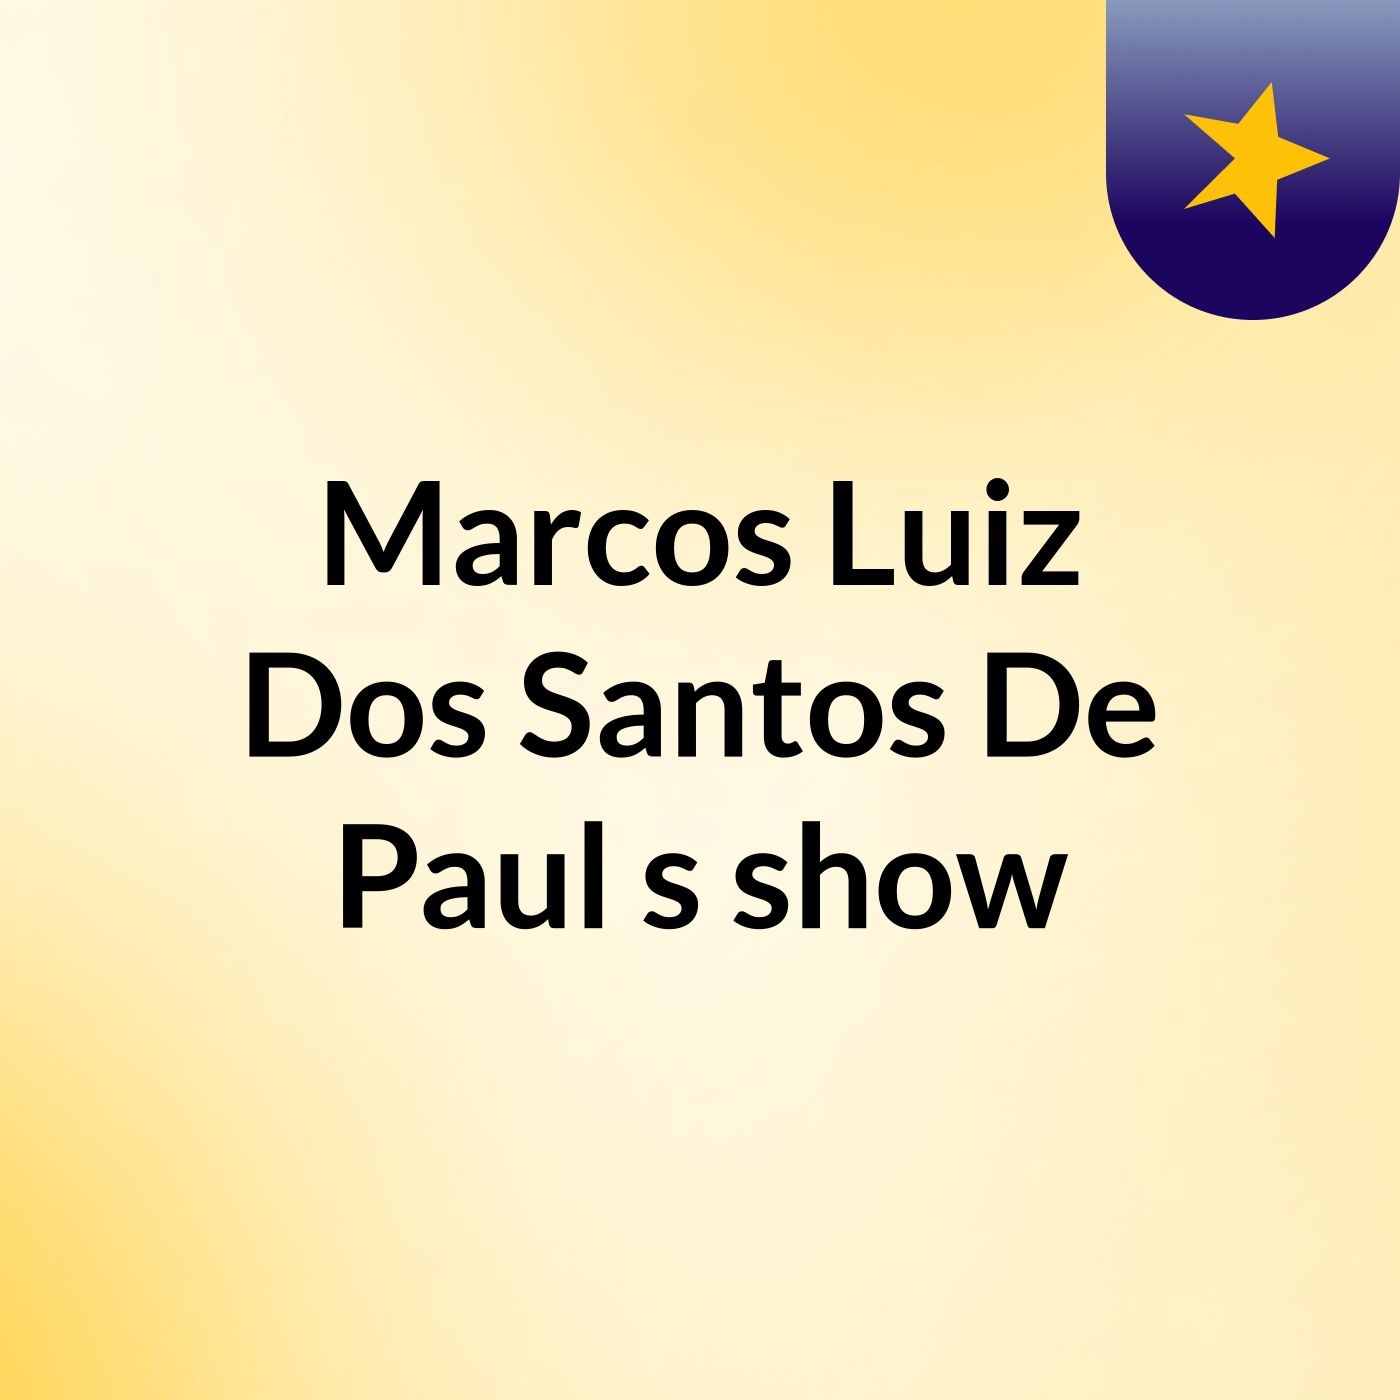 Marcos Luiz Dos Santos De Paul's show